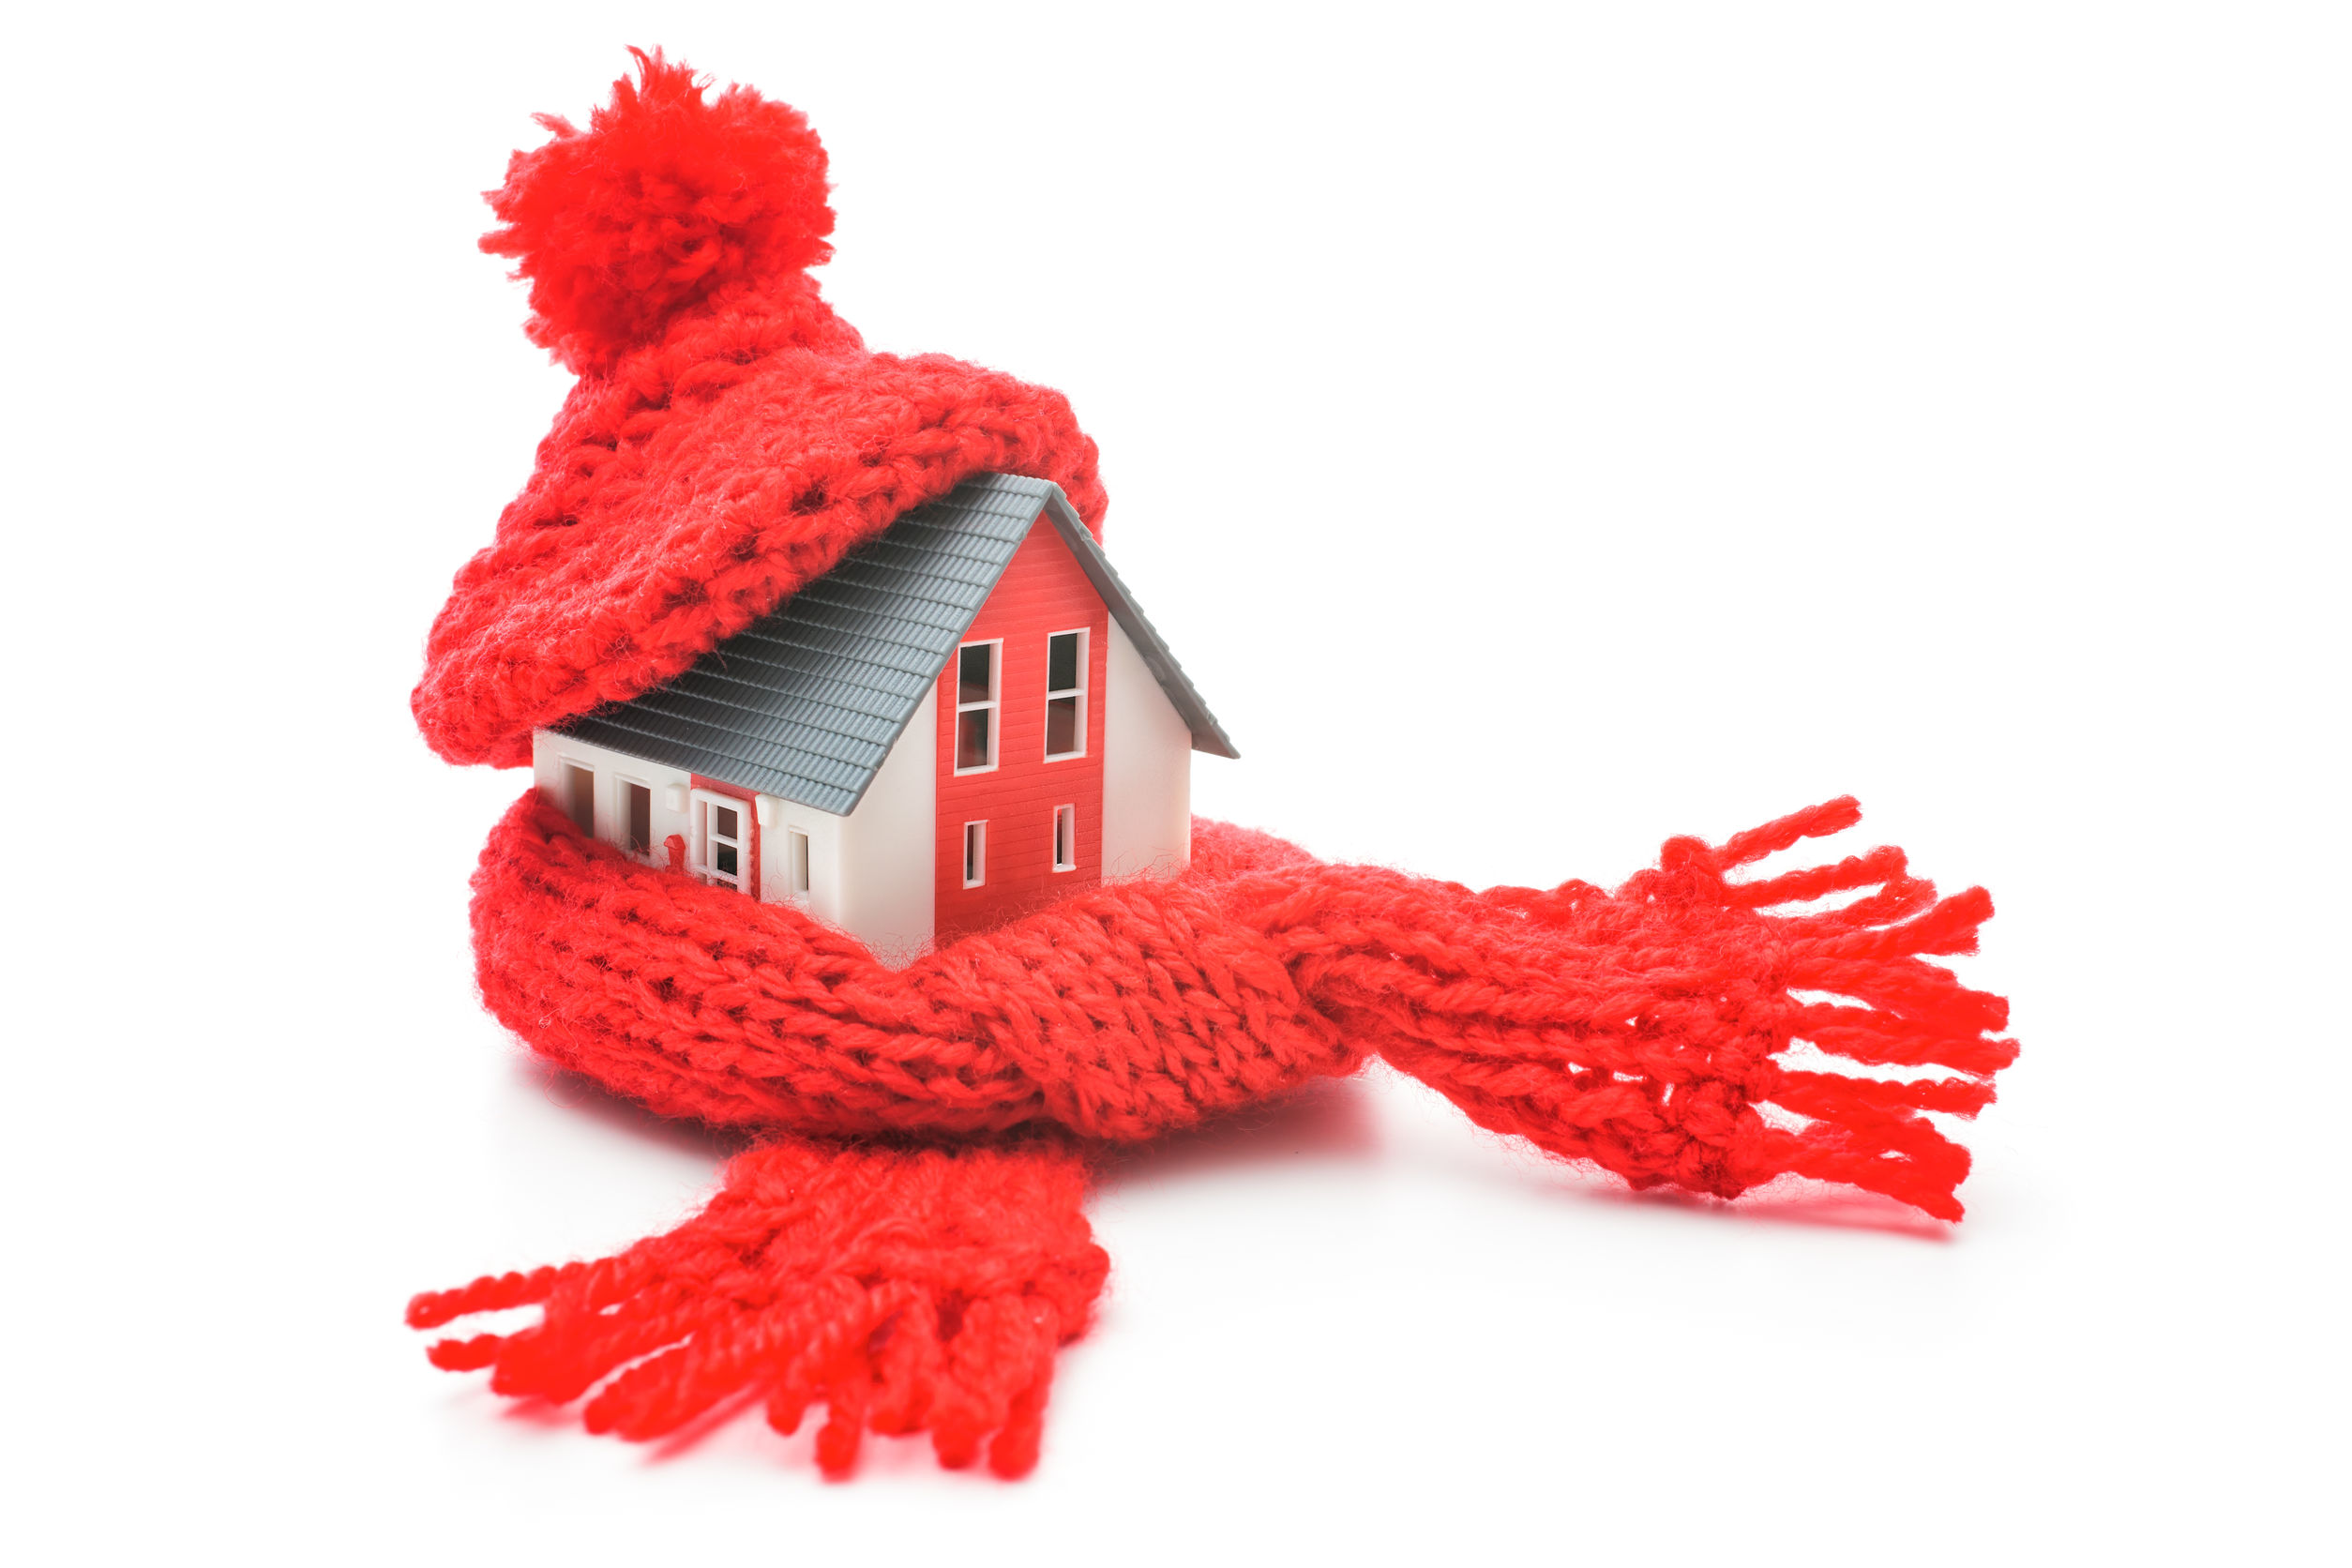 compulsory-rental-property-insulation-deductible-or-not-kiwi-tax